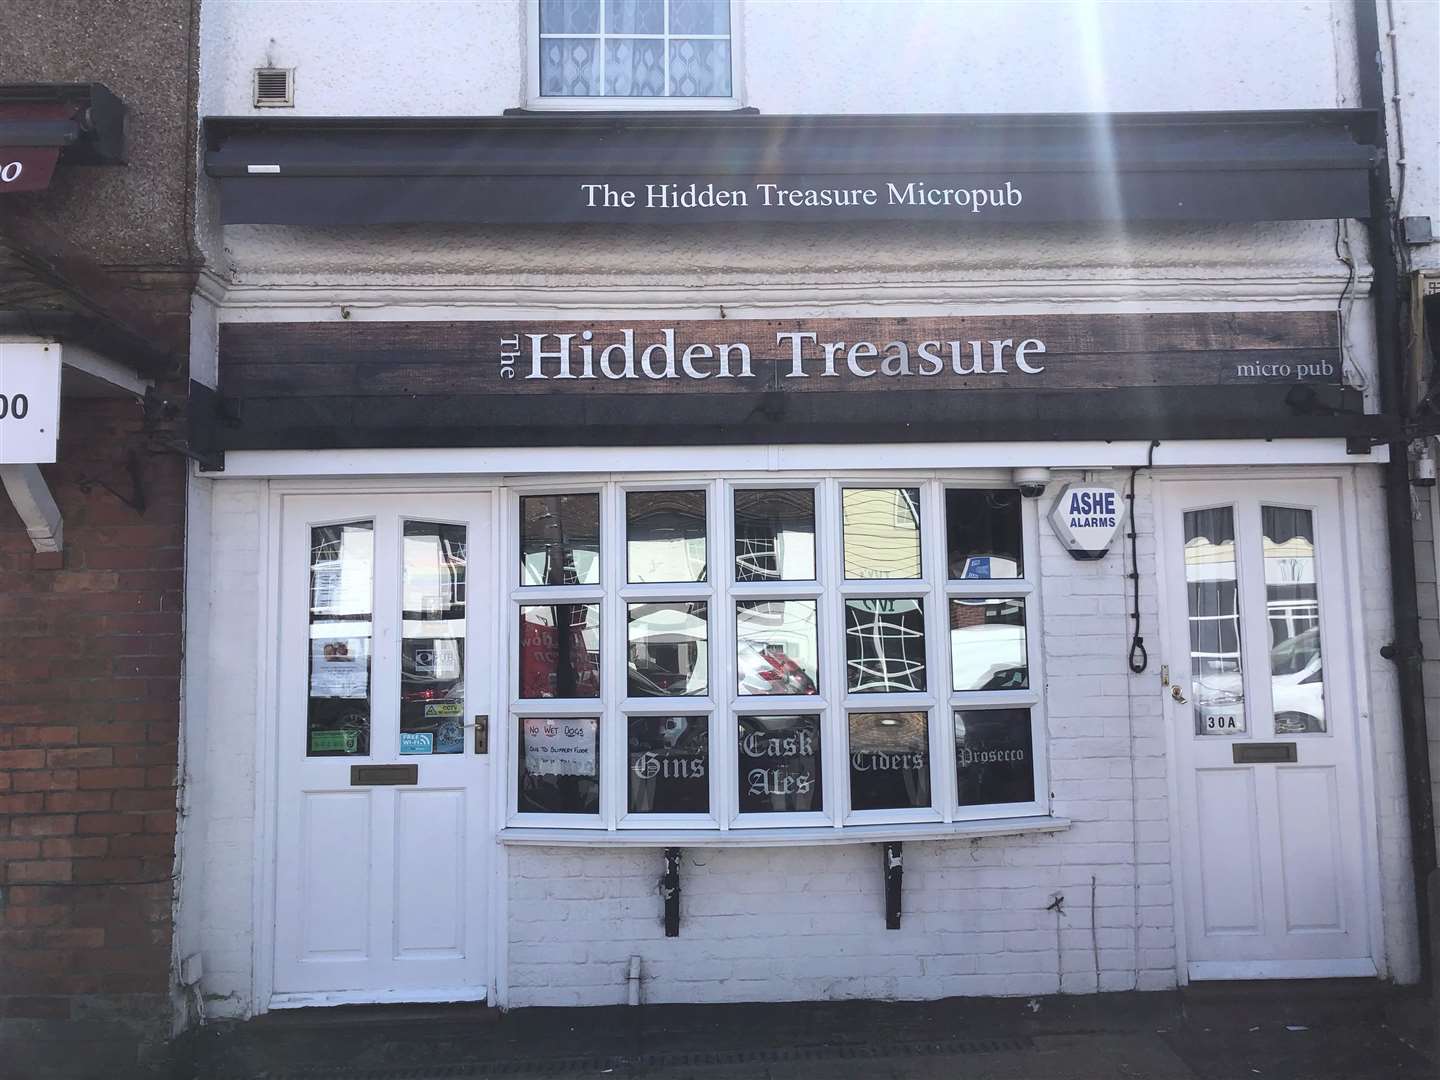 The Hidden Treasure Micropub opened in Dymchurch high street in 2019